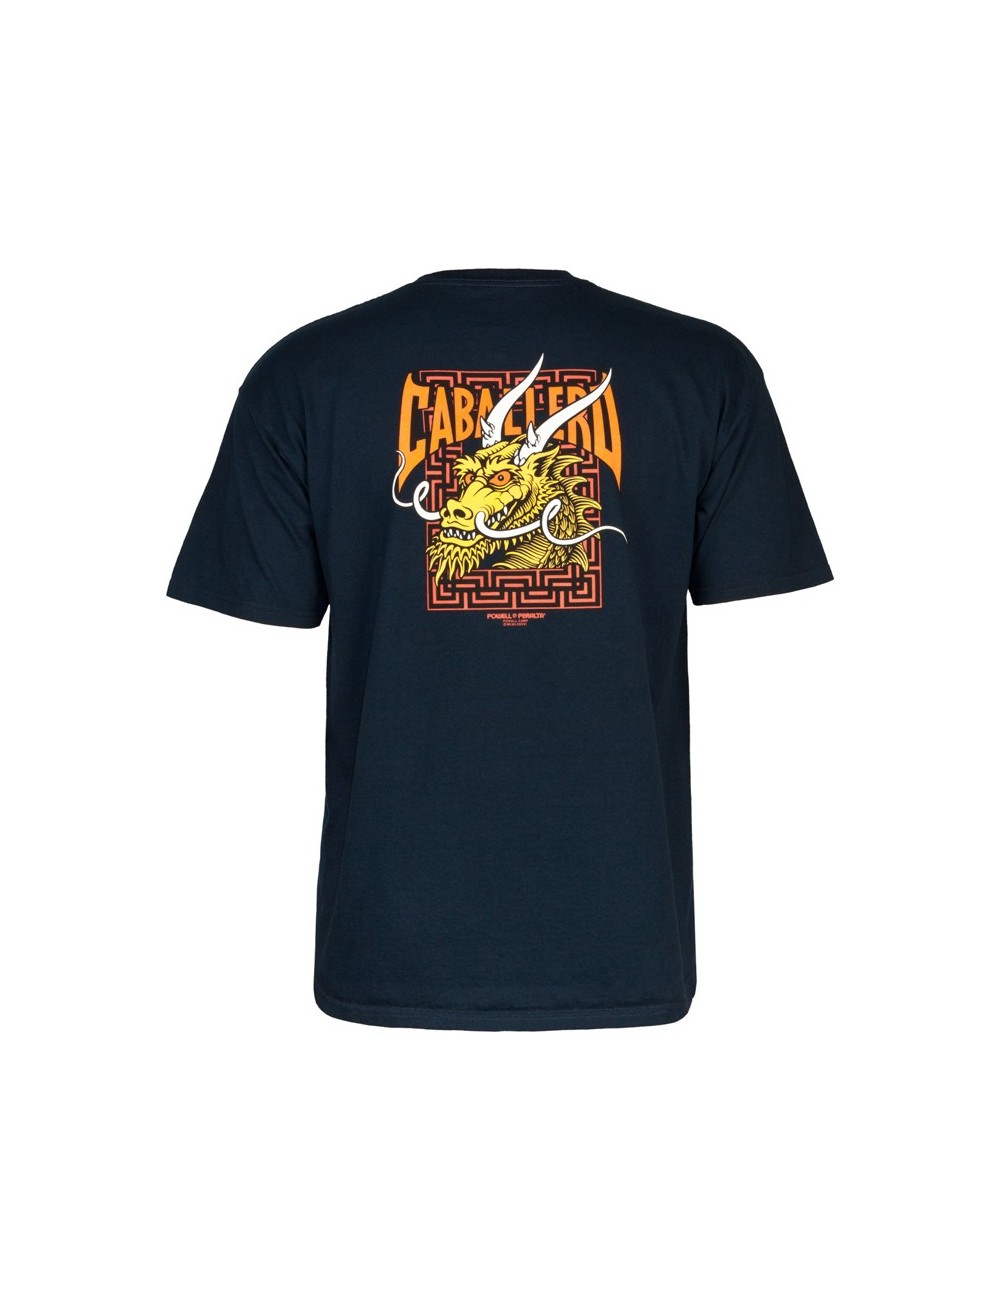 Powell Peralta Steve Caballero Street Dragon Navy (Camiseta)